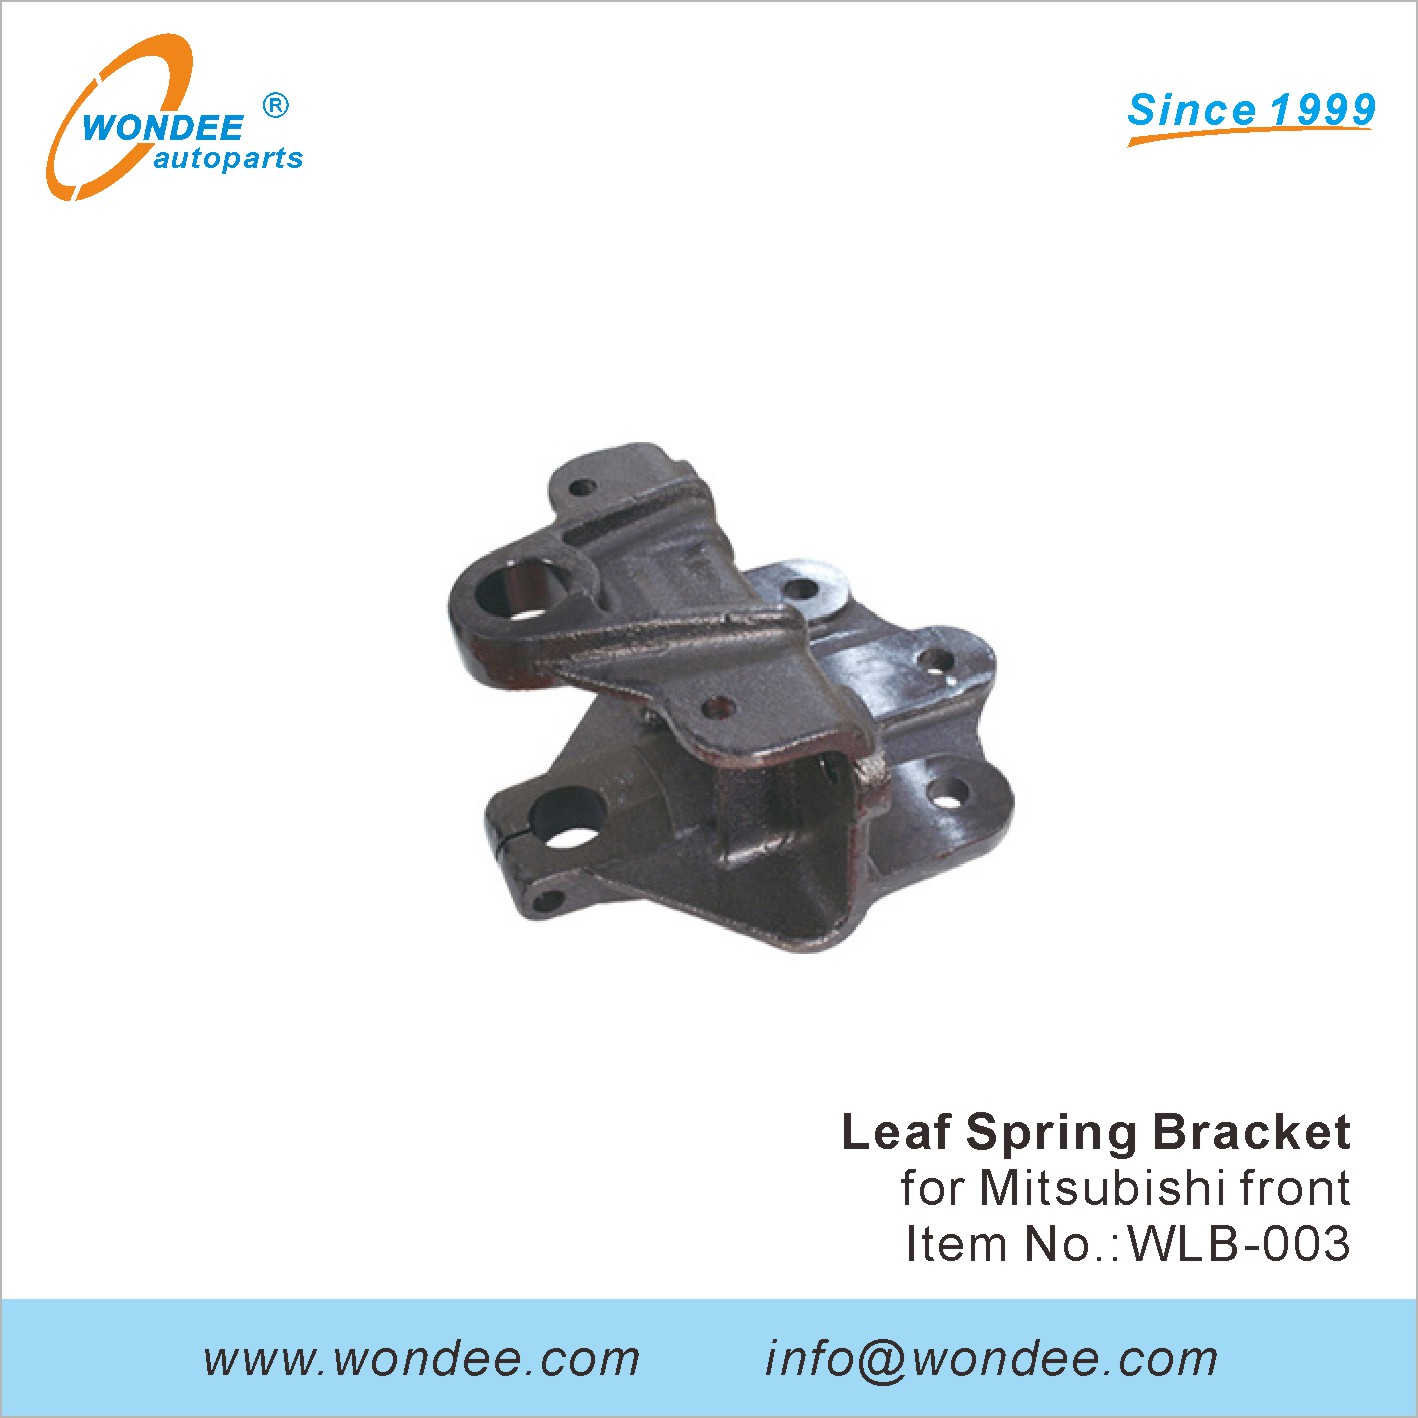 WONDEE leaf spring bracket (3)